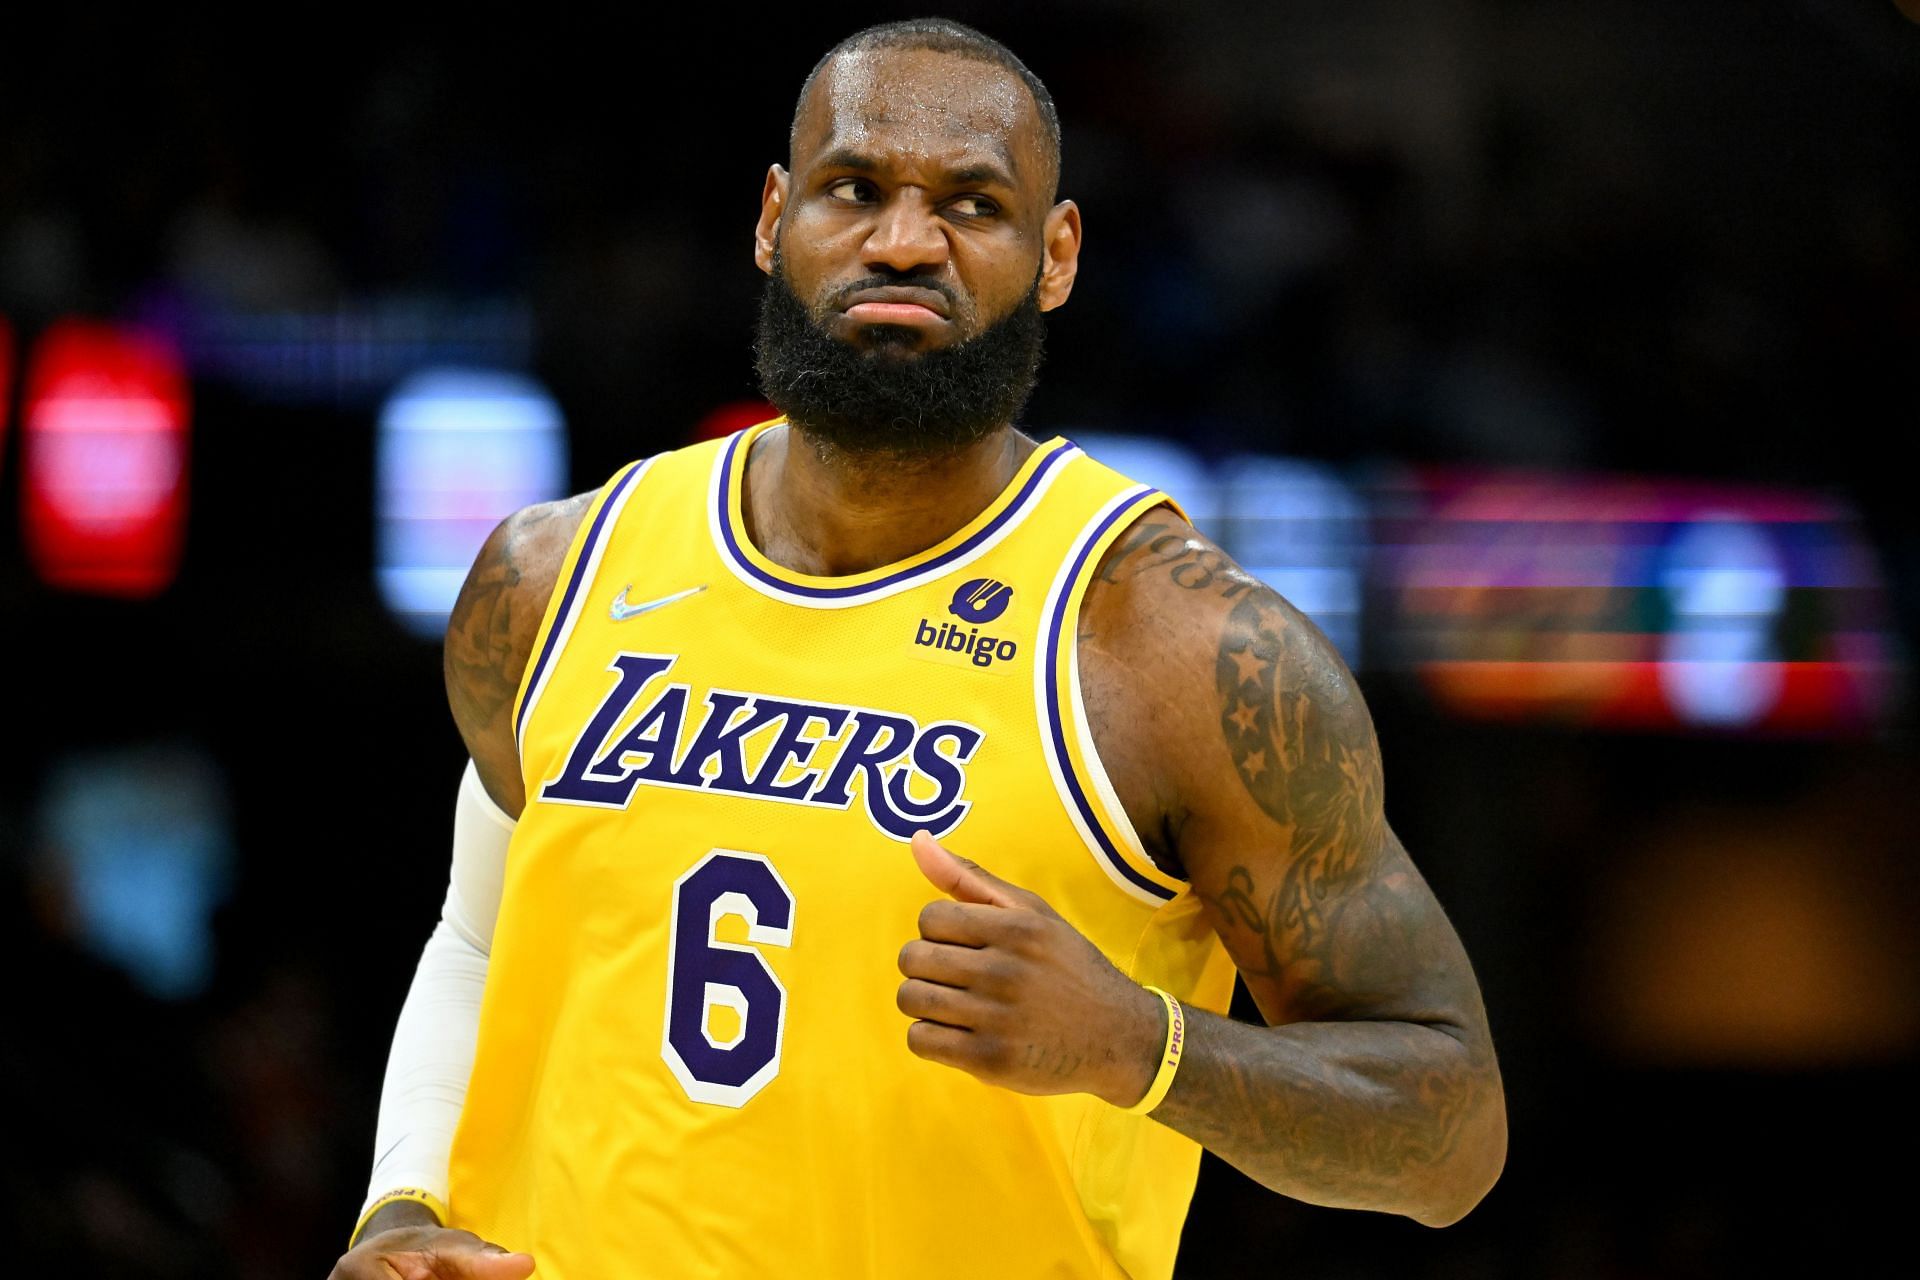 Los Angeles Lakers superstar forward LeBron James